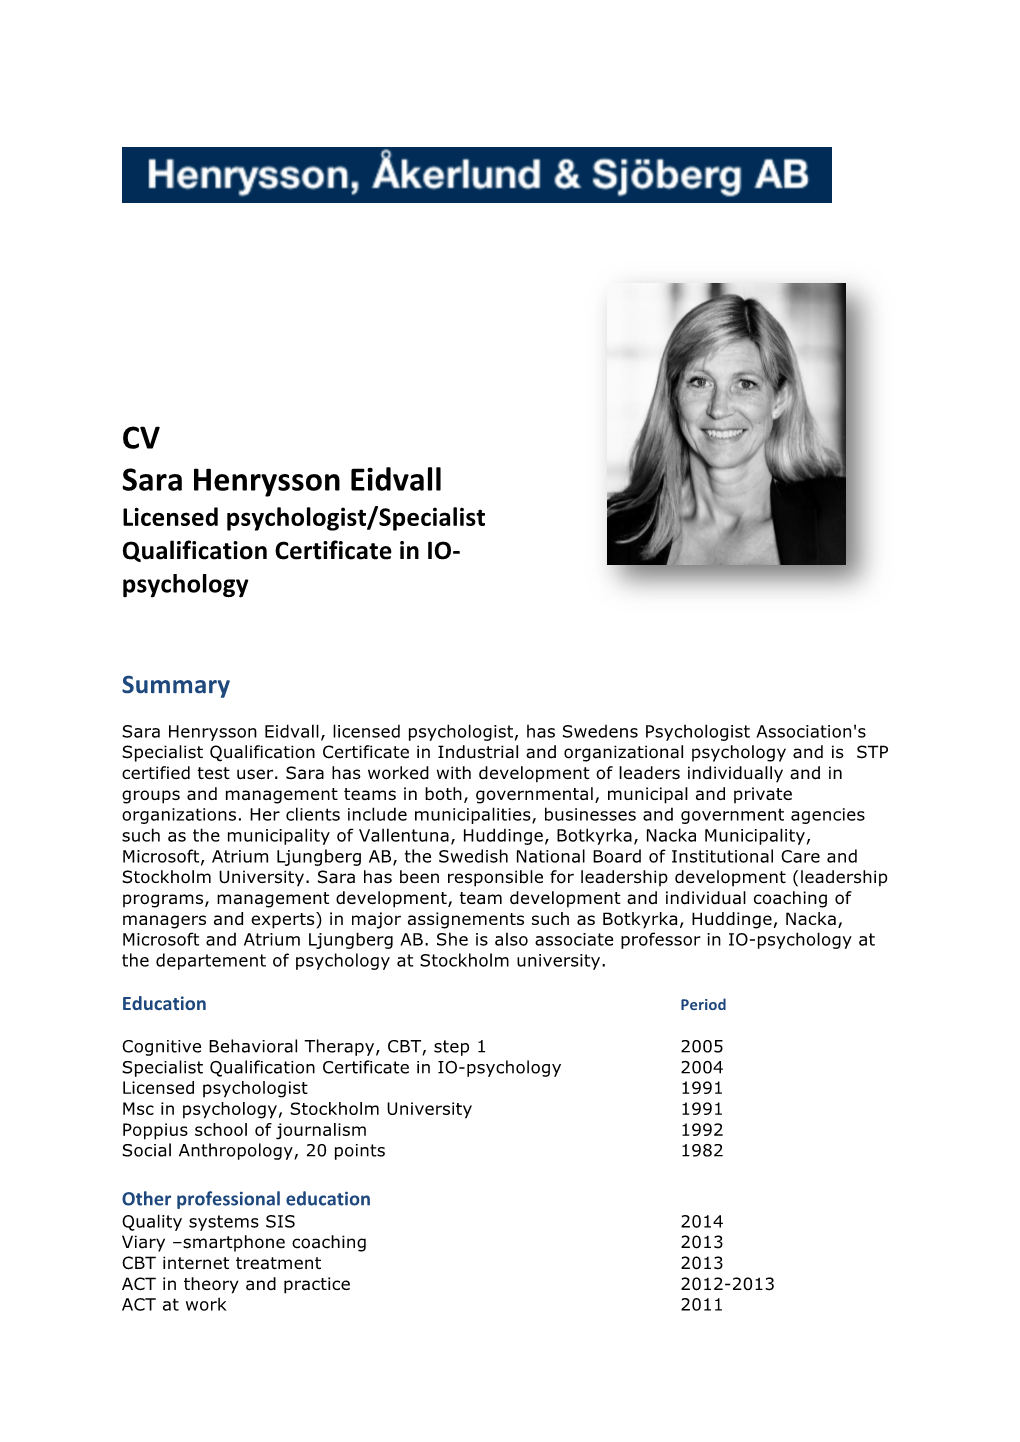 CV Sara Henrysson Eidvall Licensed Psychologist/Specialist Qualification Certificate in IO- Psychology